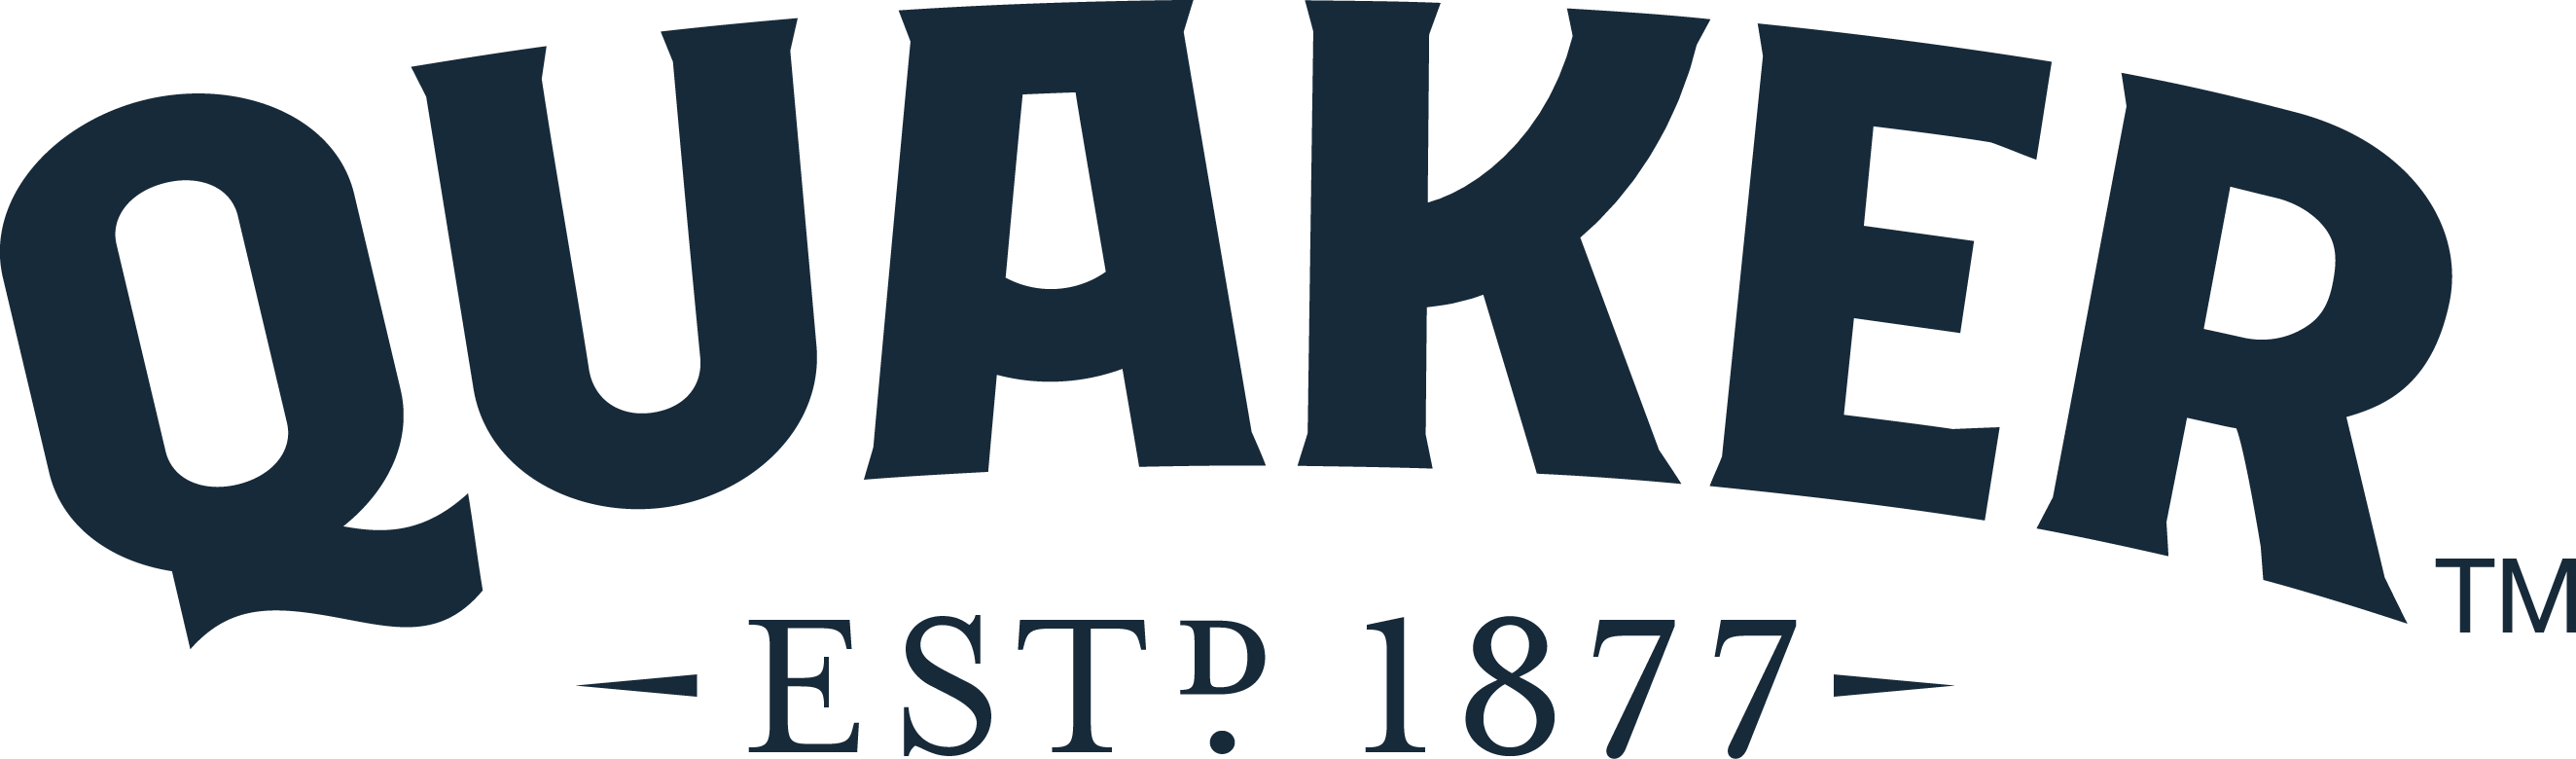 Quaker Oatmeal Logo